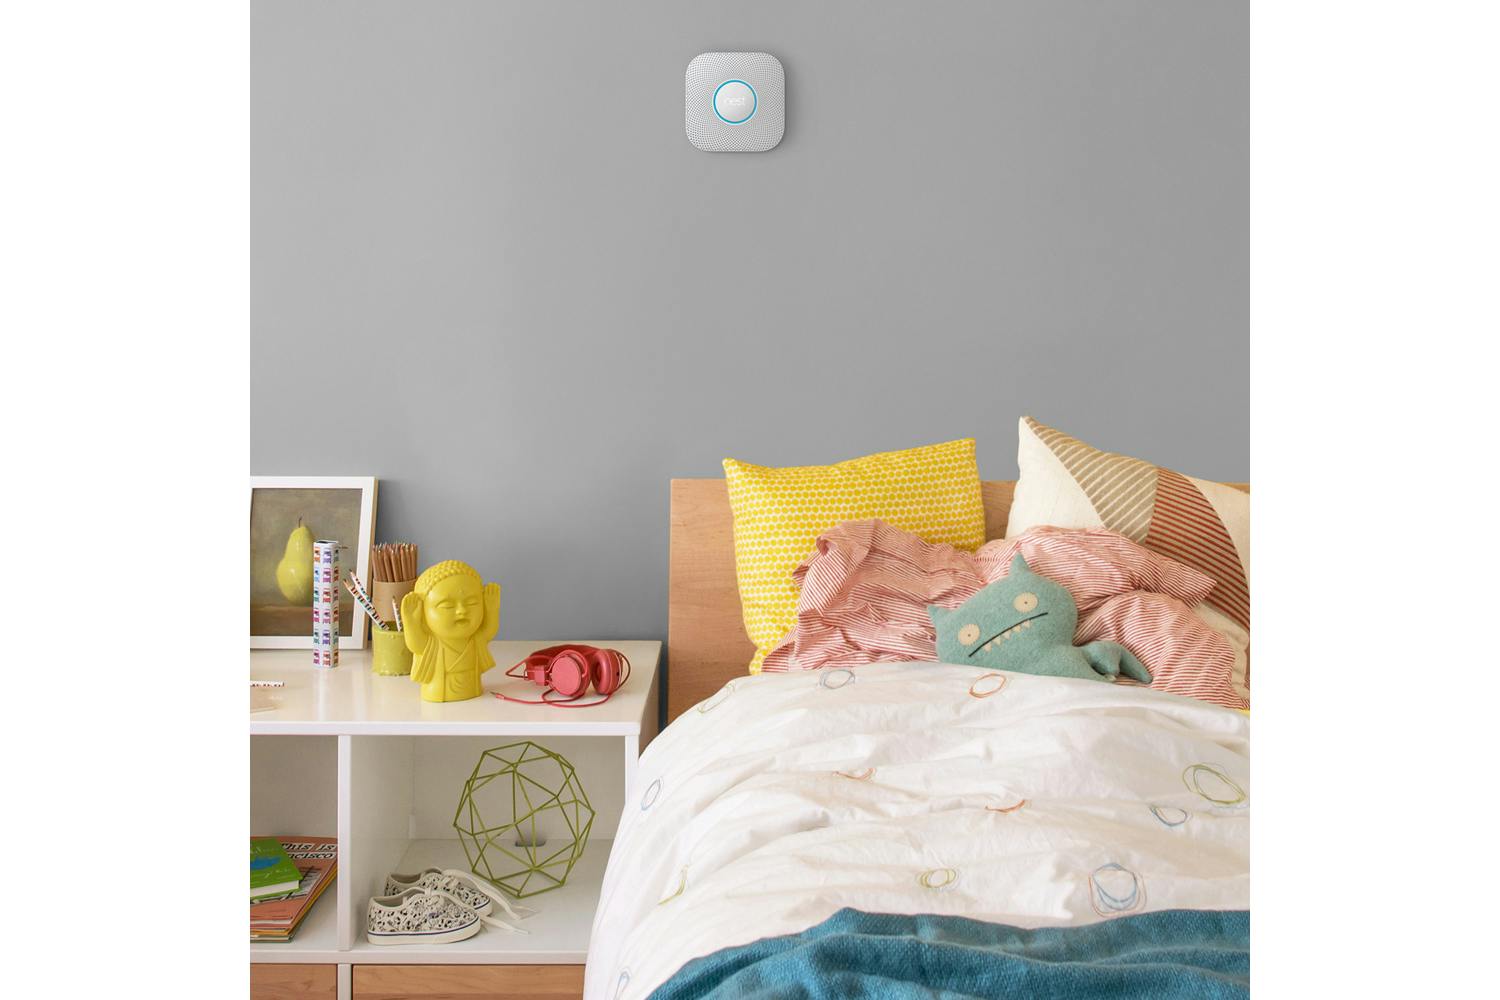 Google Nest Protect Smoke & Carbon Monoxide Alarm Battery model